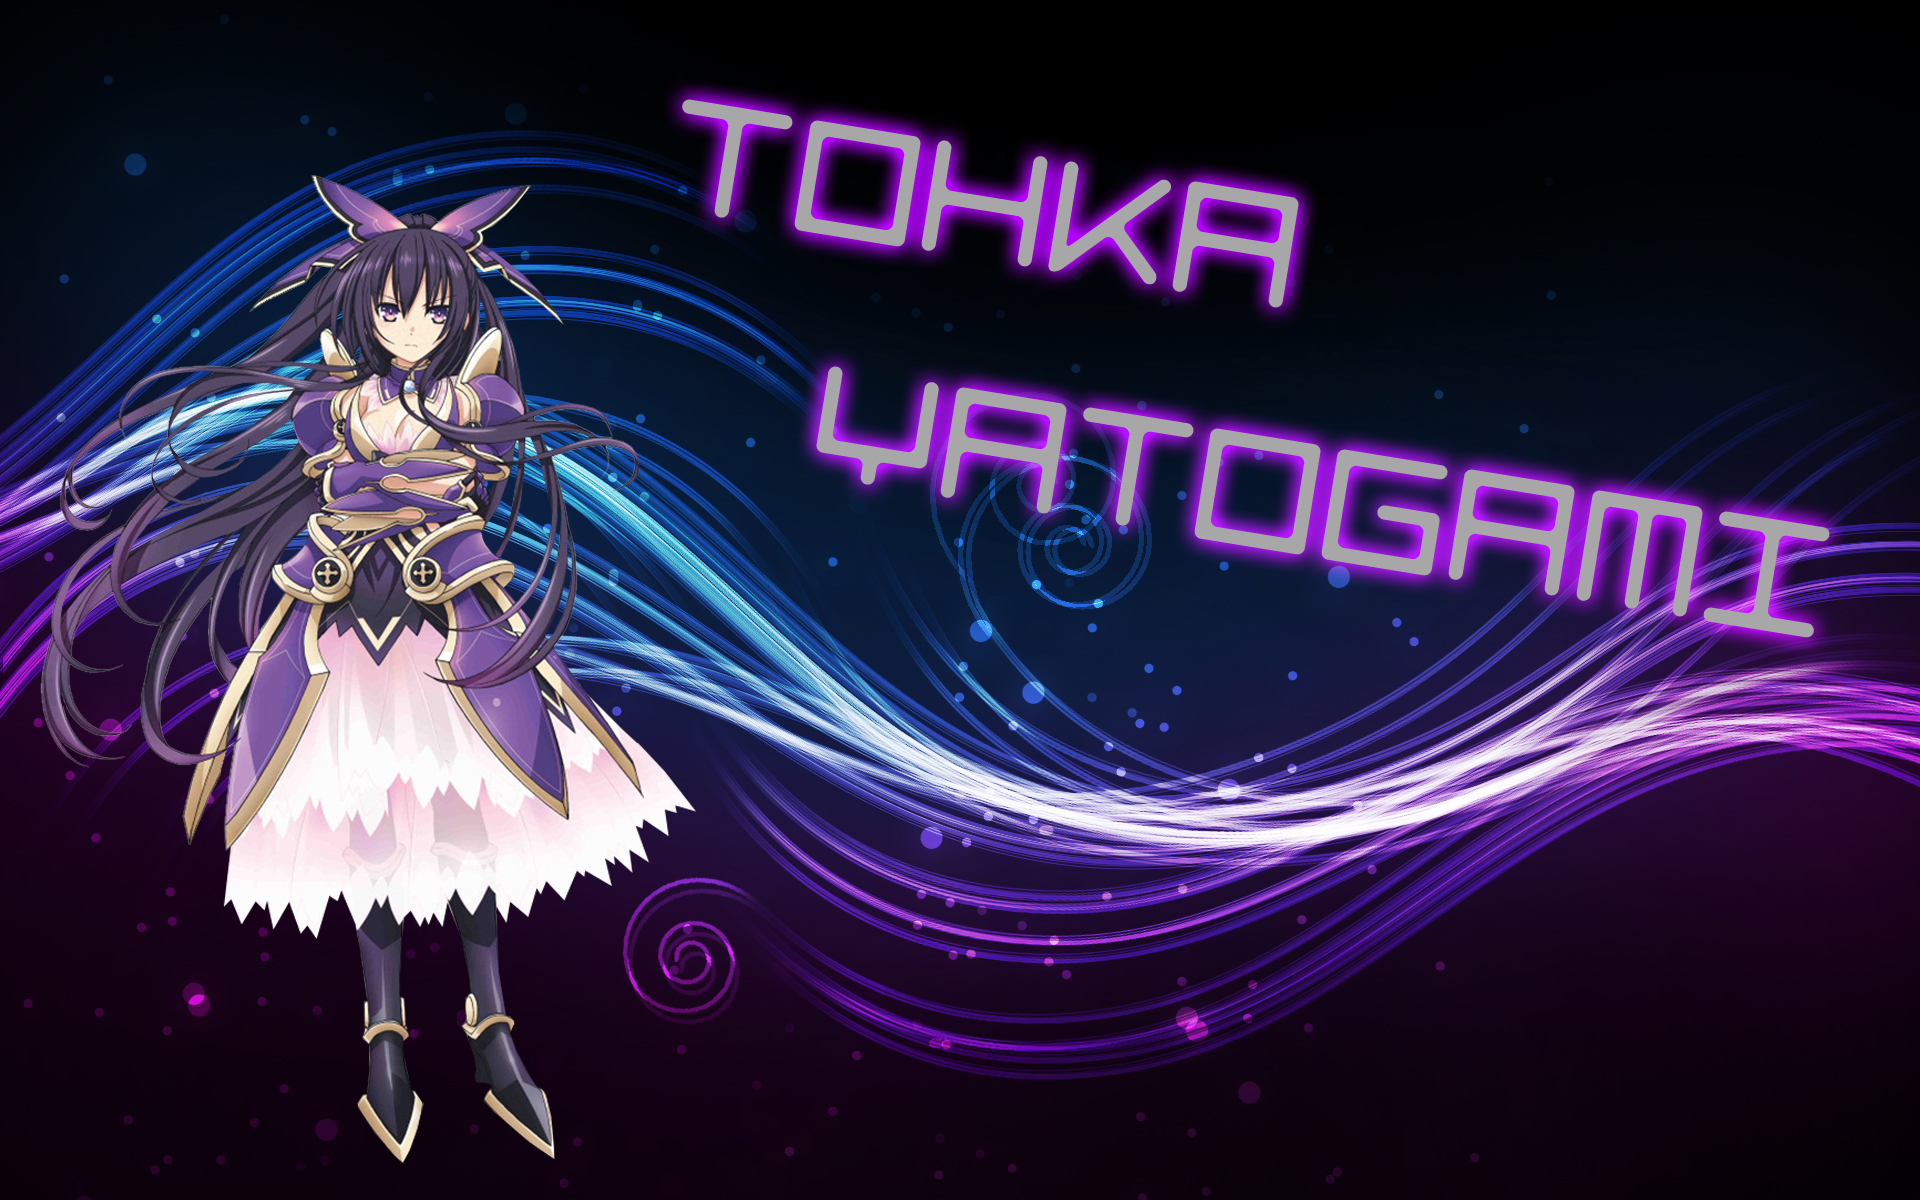 tohka yatogami wallpaper,purple,violet,graphic design,fictional character,graphics